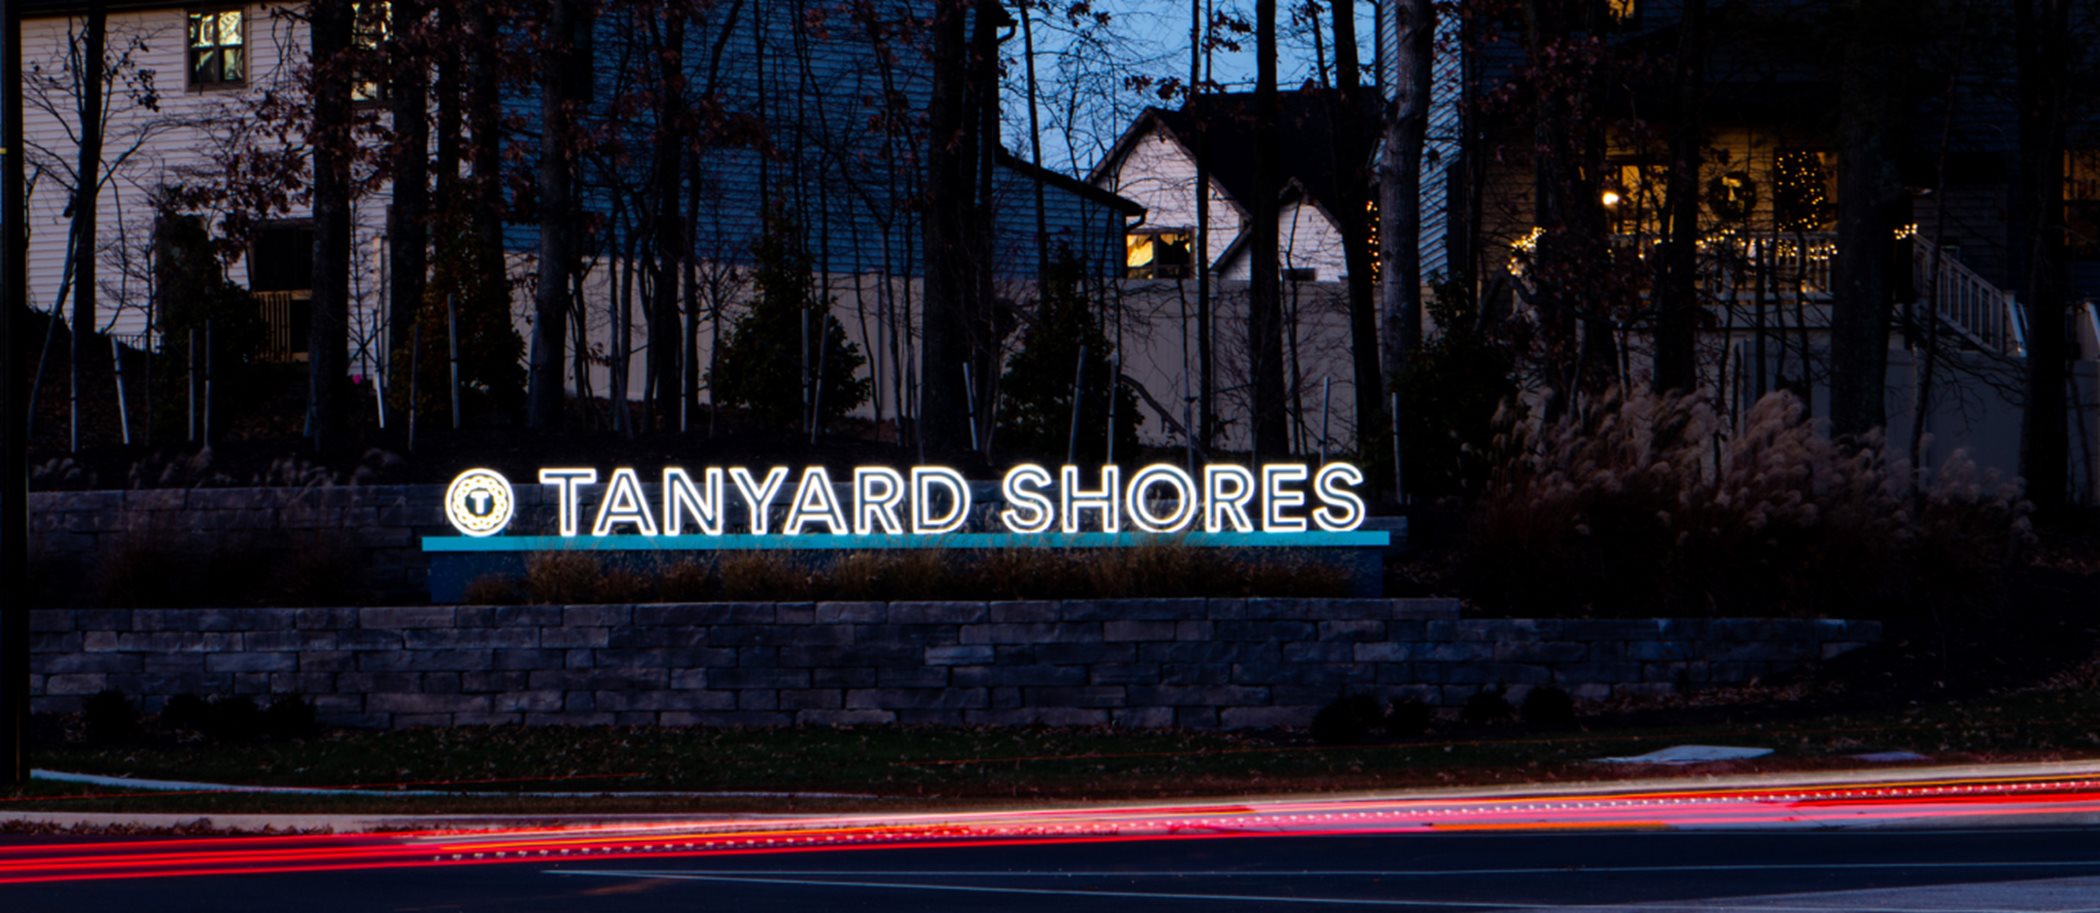 Tanyard Shores Entrance Sign